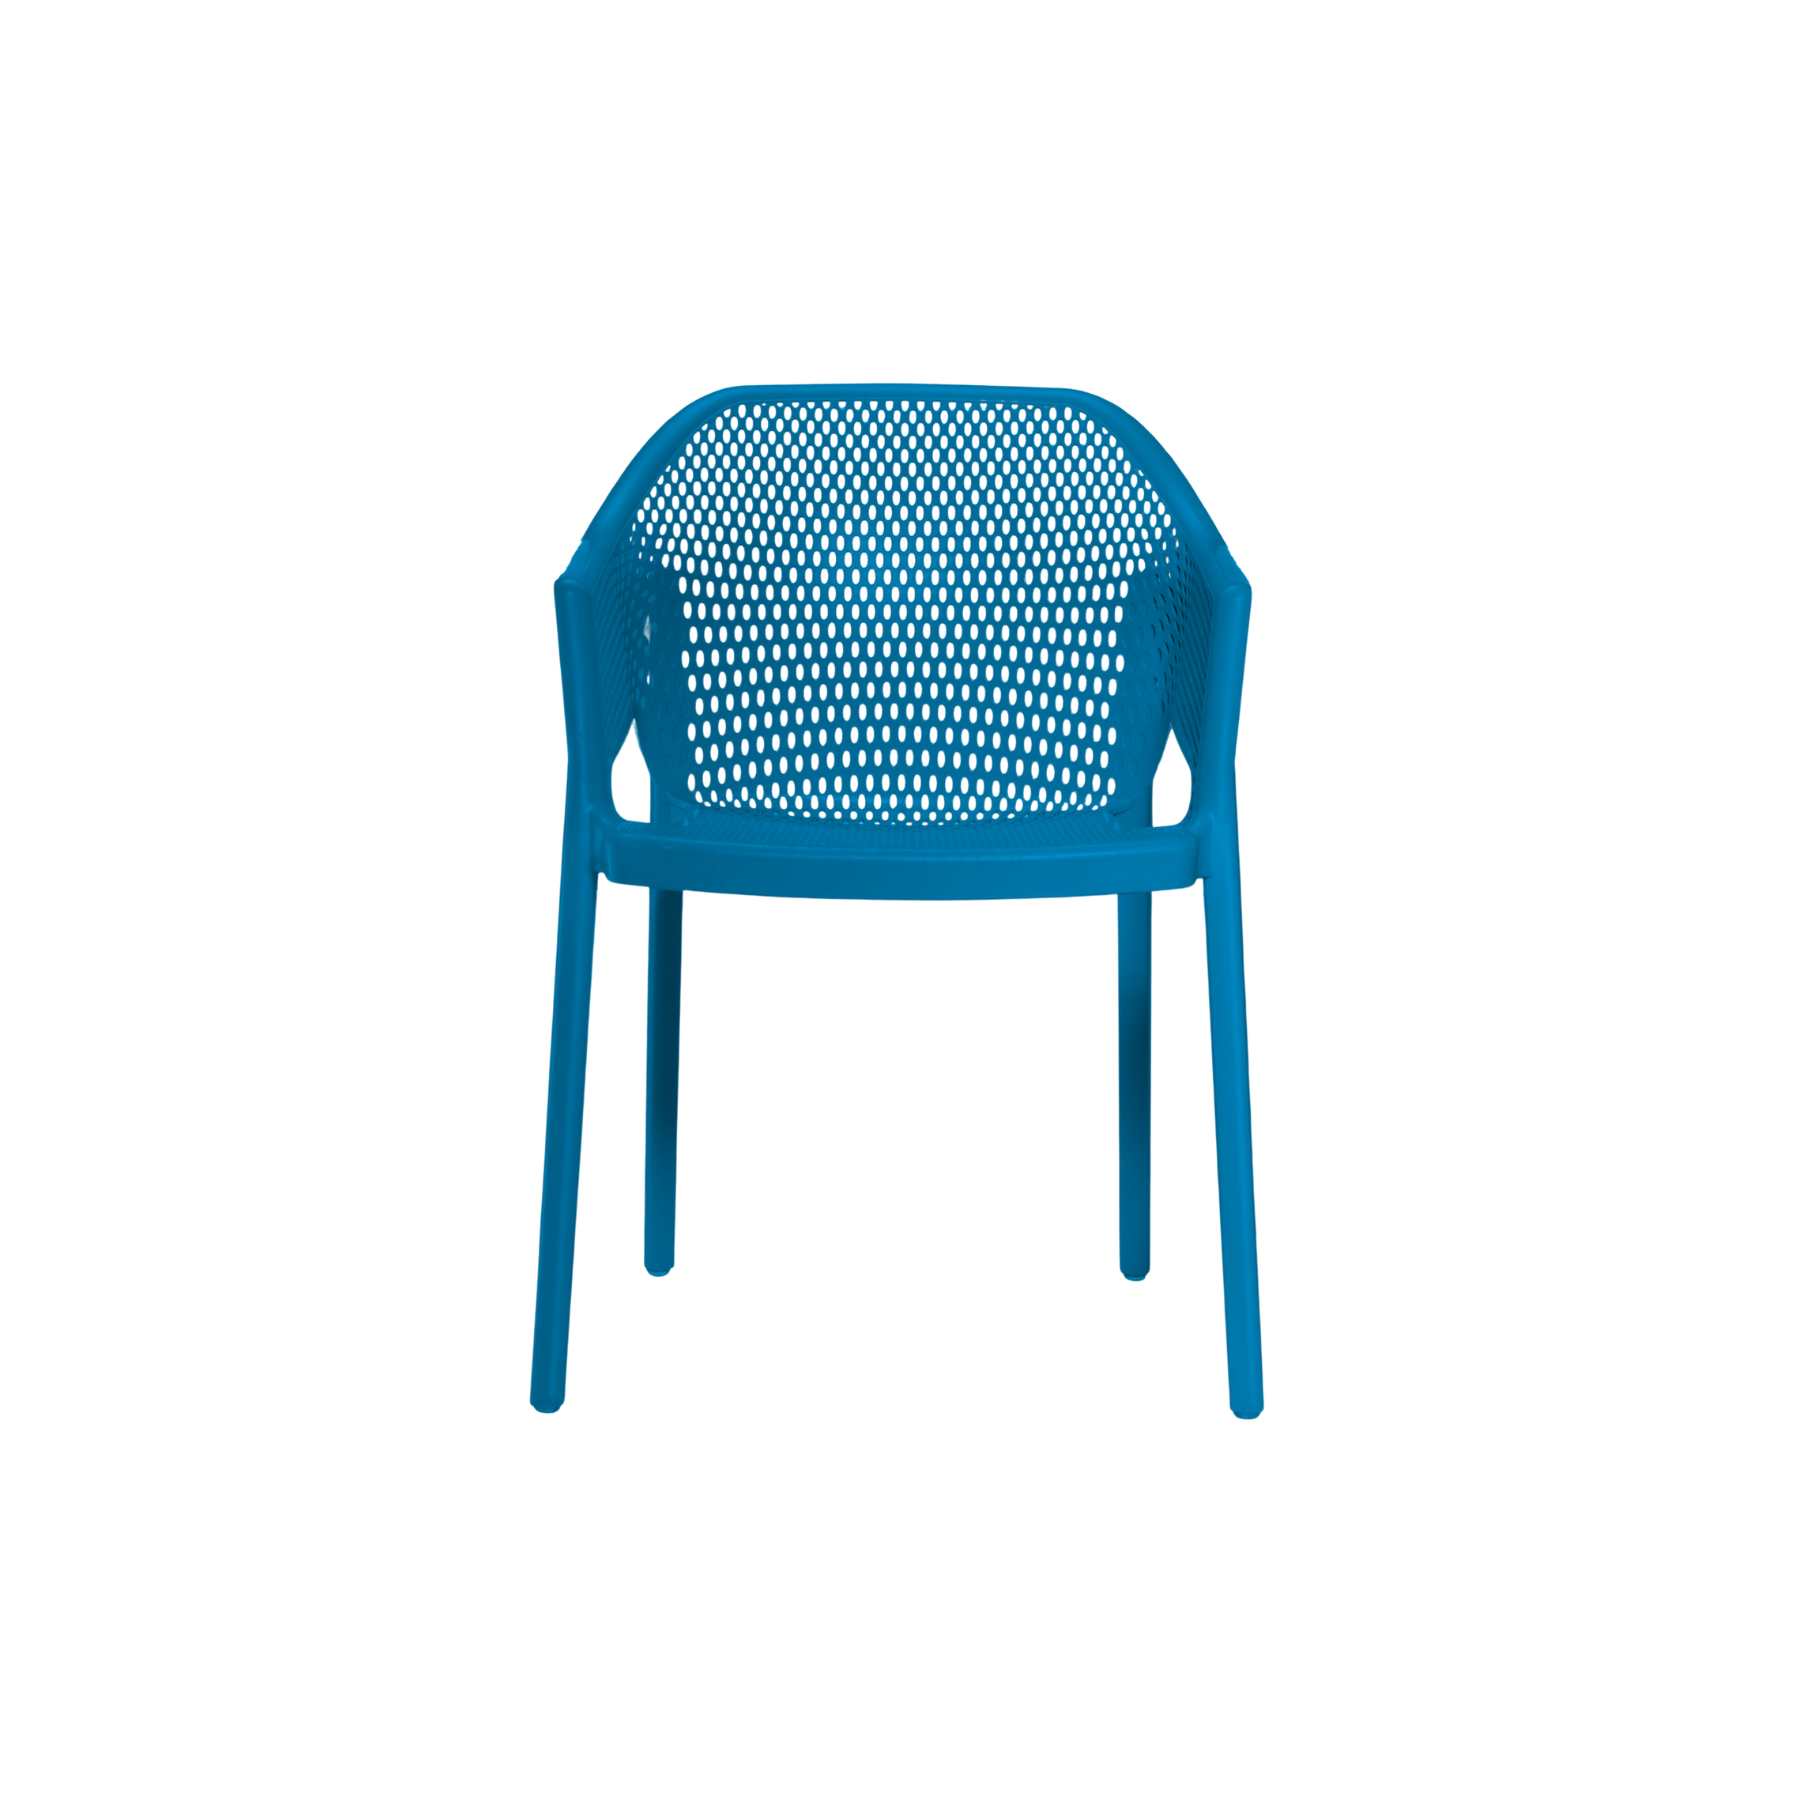 Cadeira Minush | Gaber